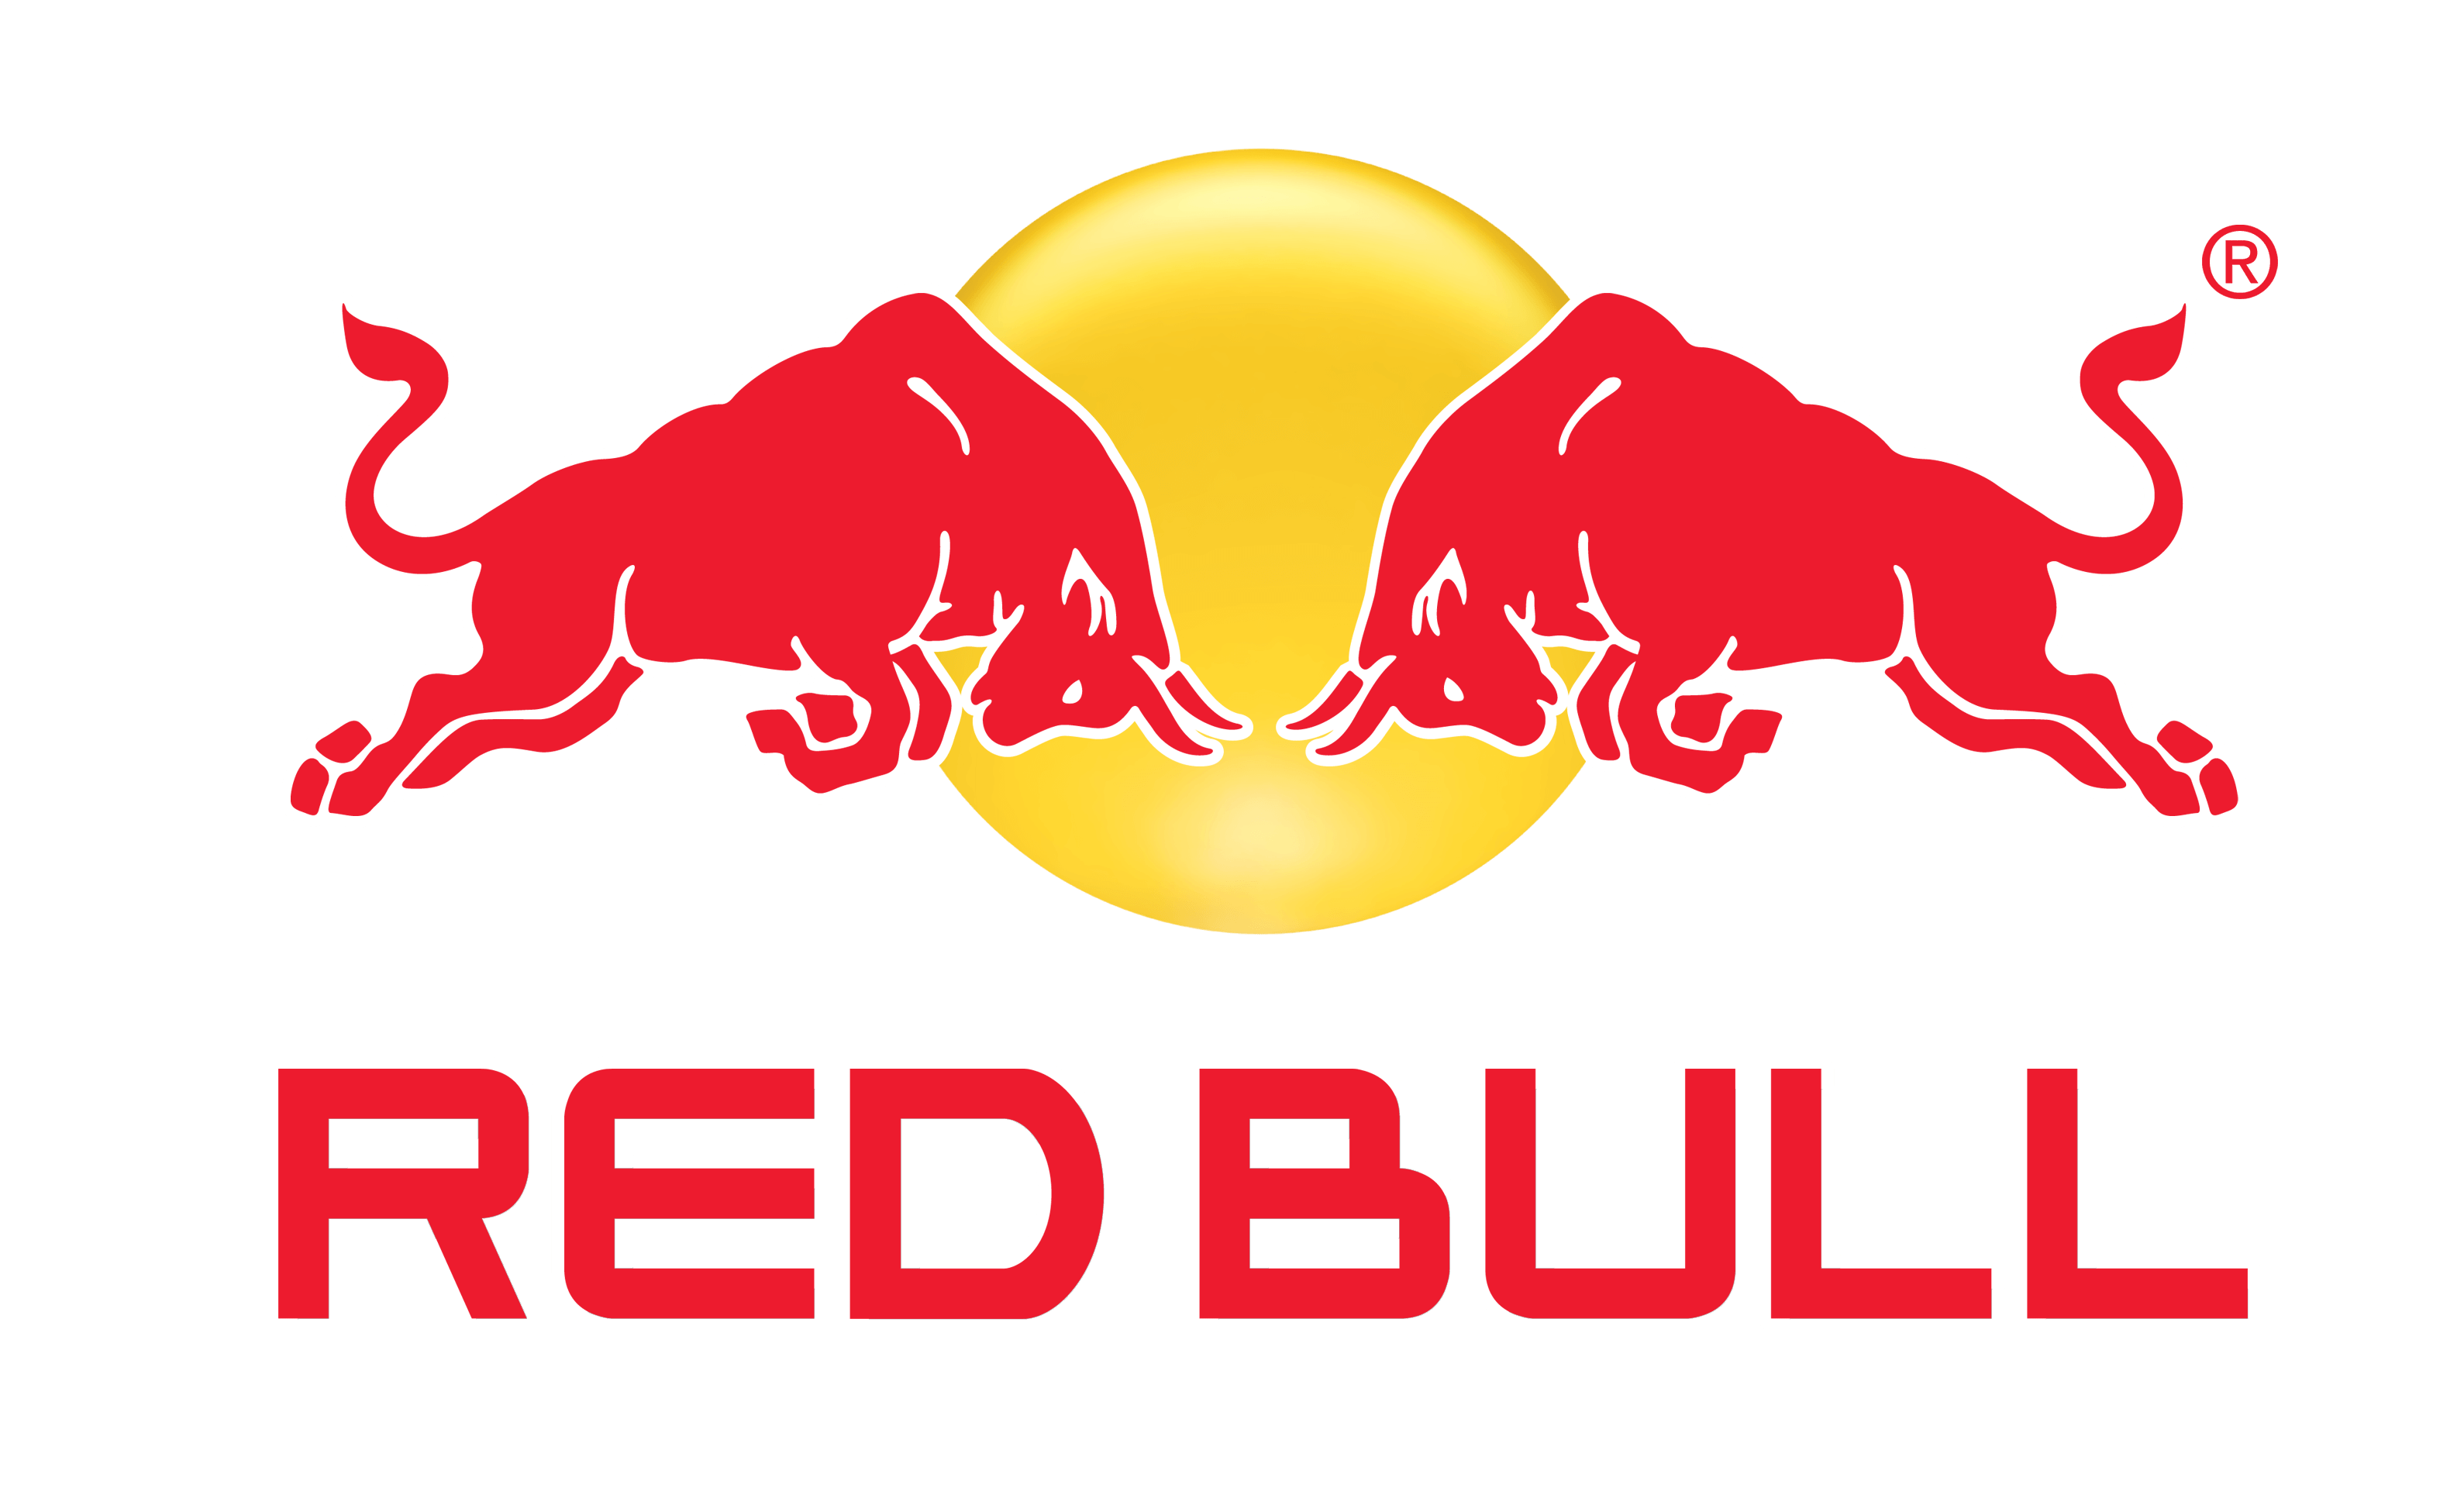 Red Bull logo, logotype